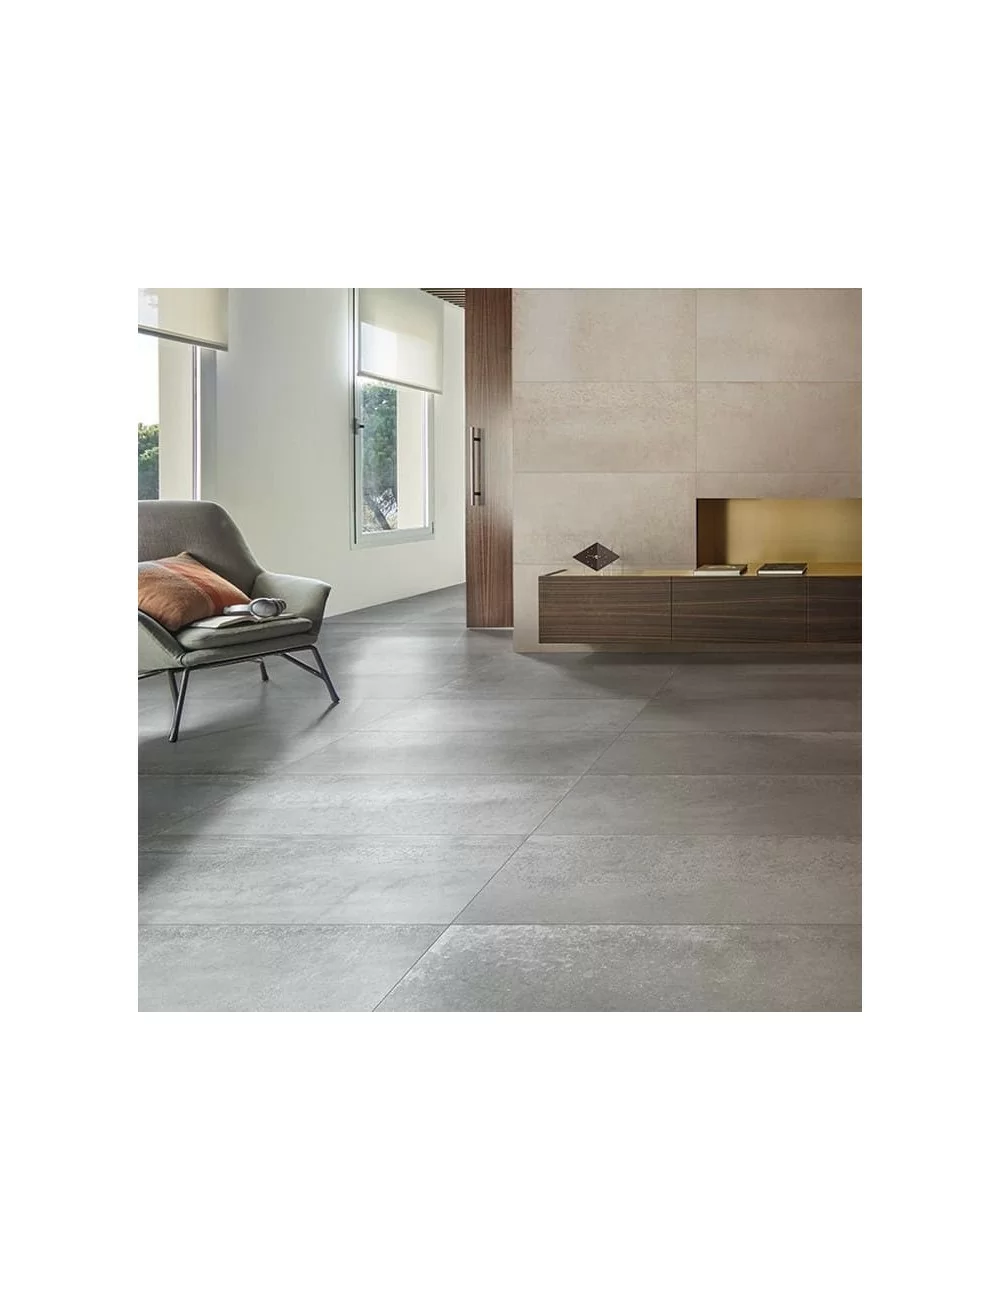 ferrocemento grey tile thin